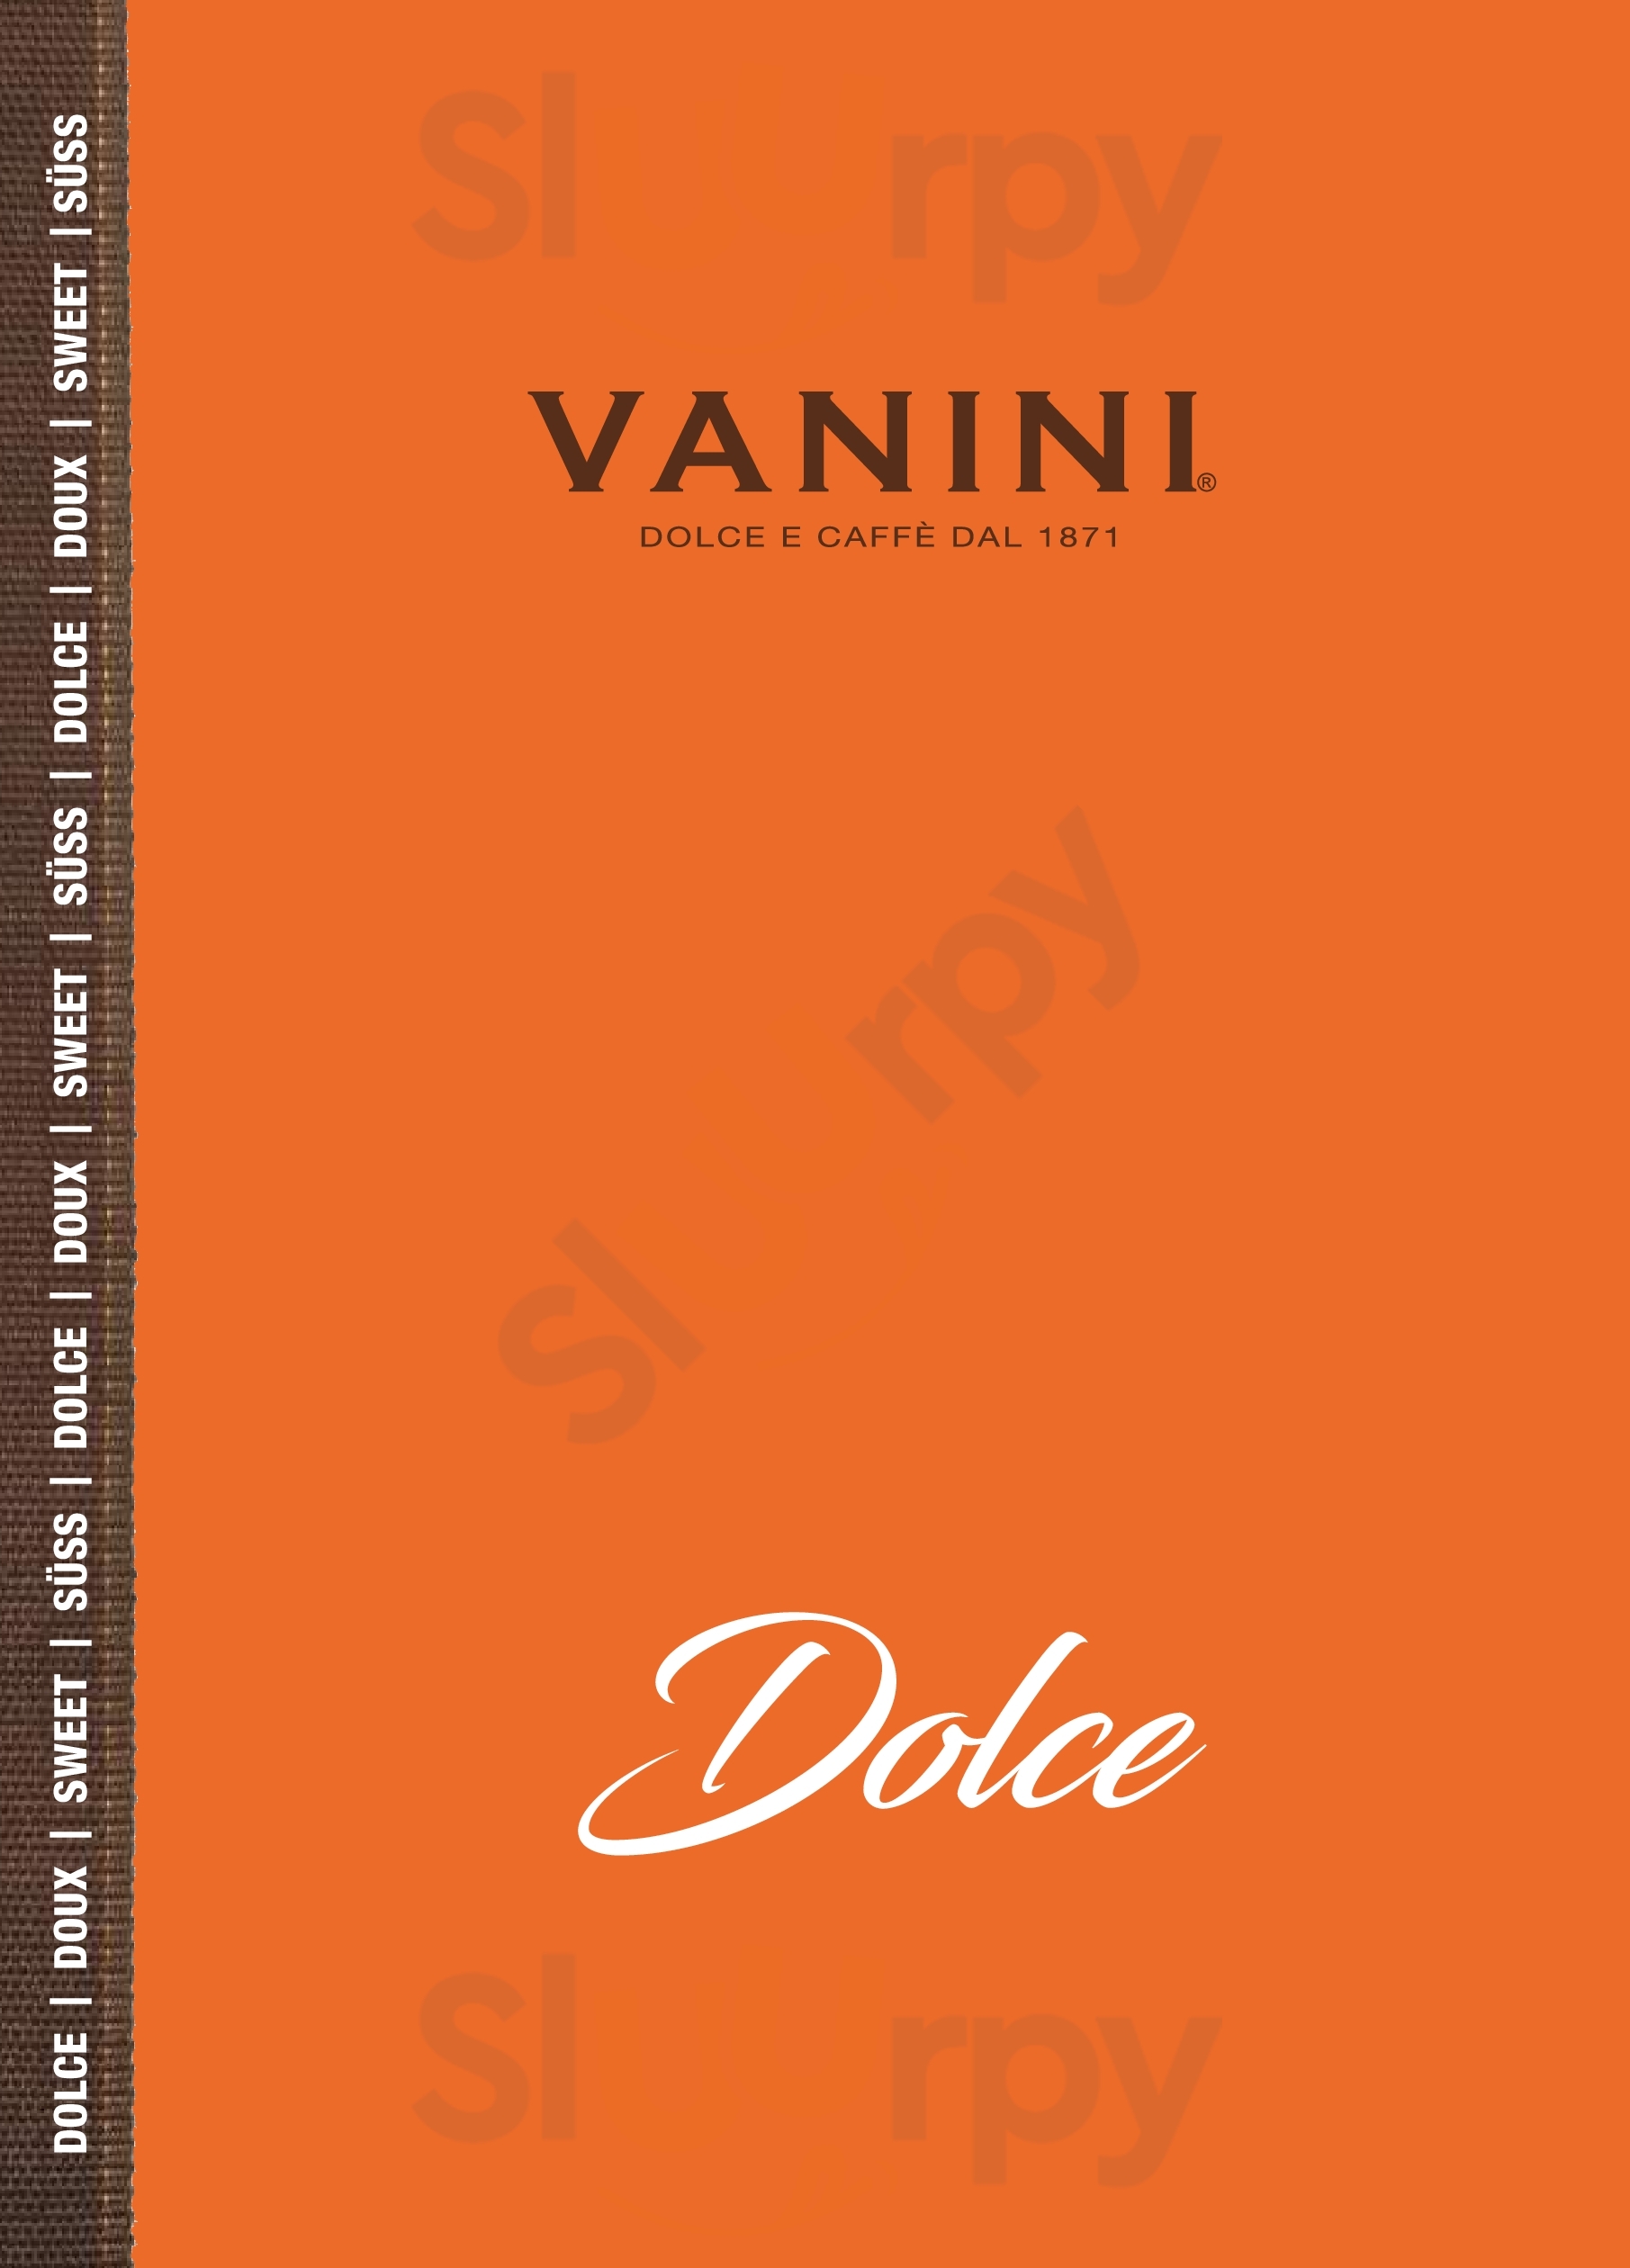 Vanini Dolce E Caffè Lugano Menu - 1